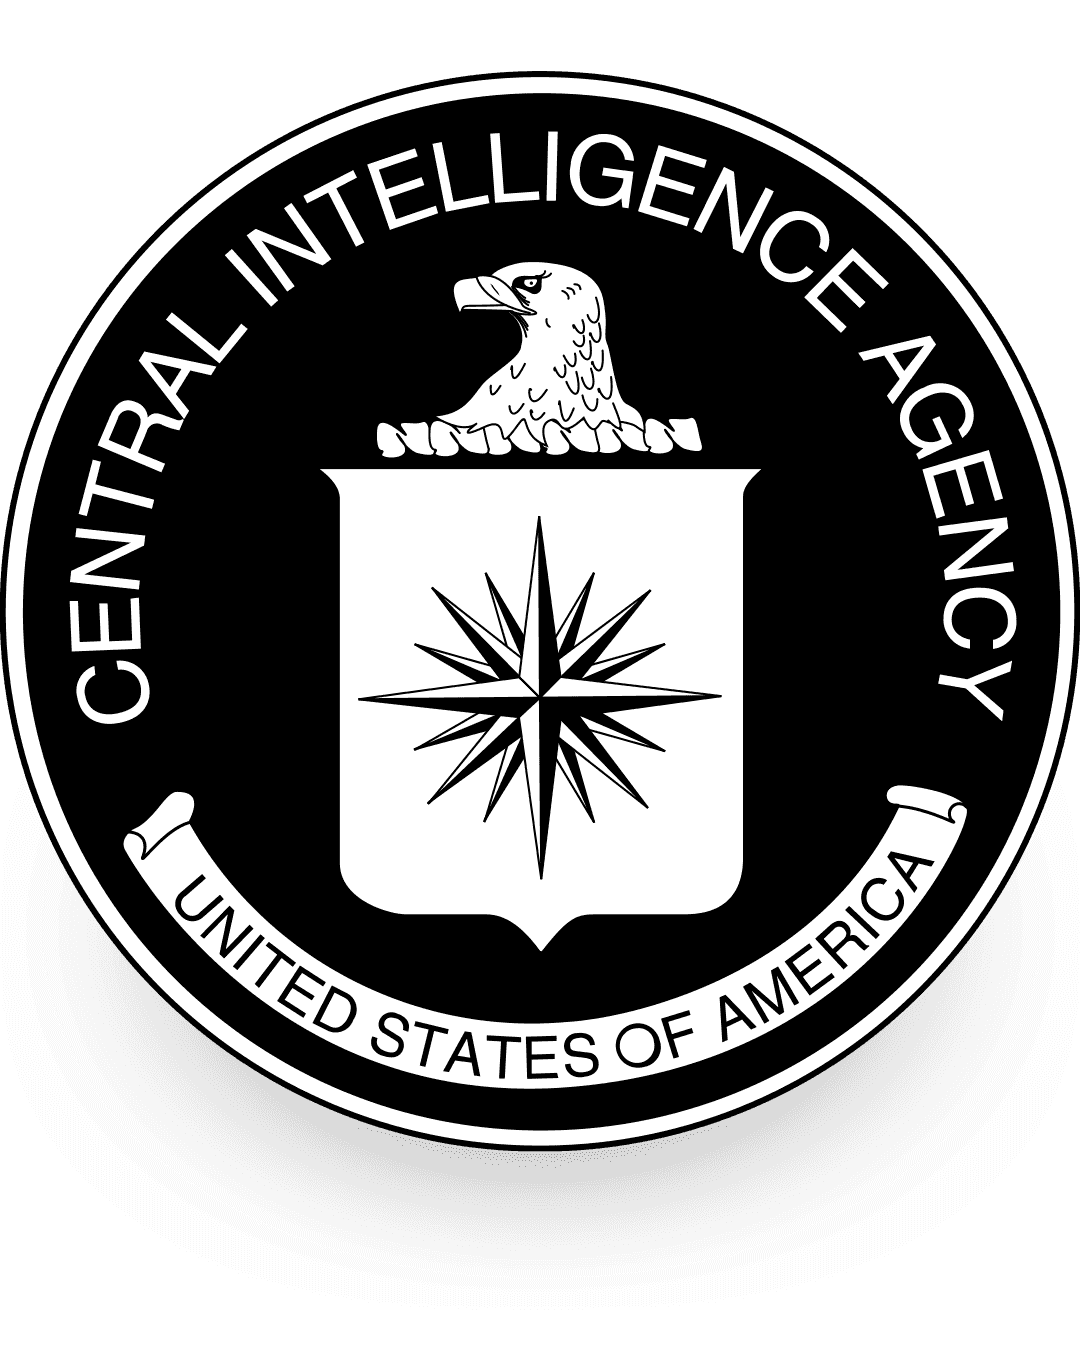 Black and white CIA seal.